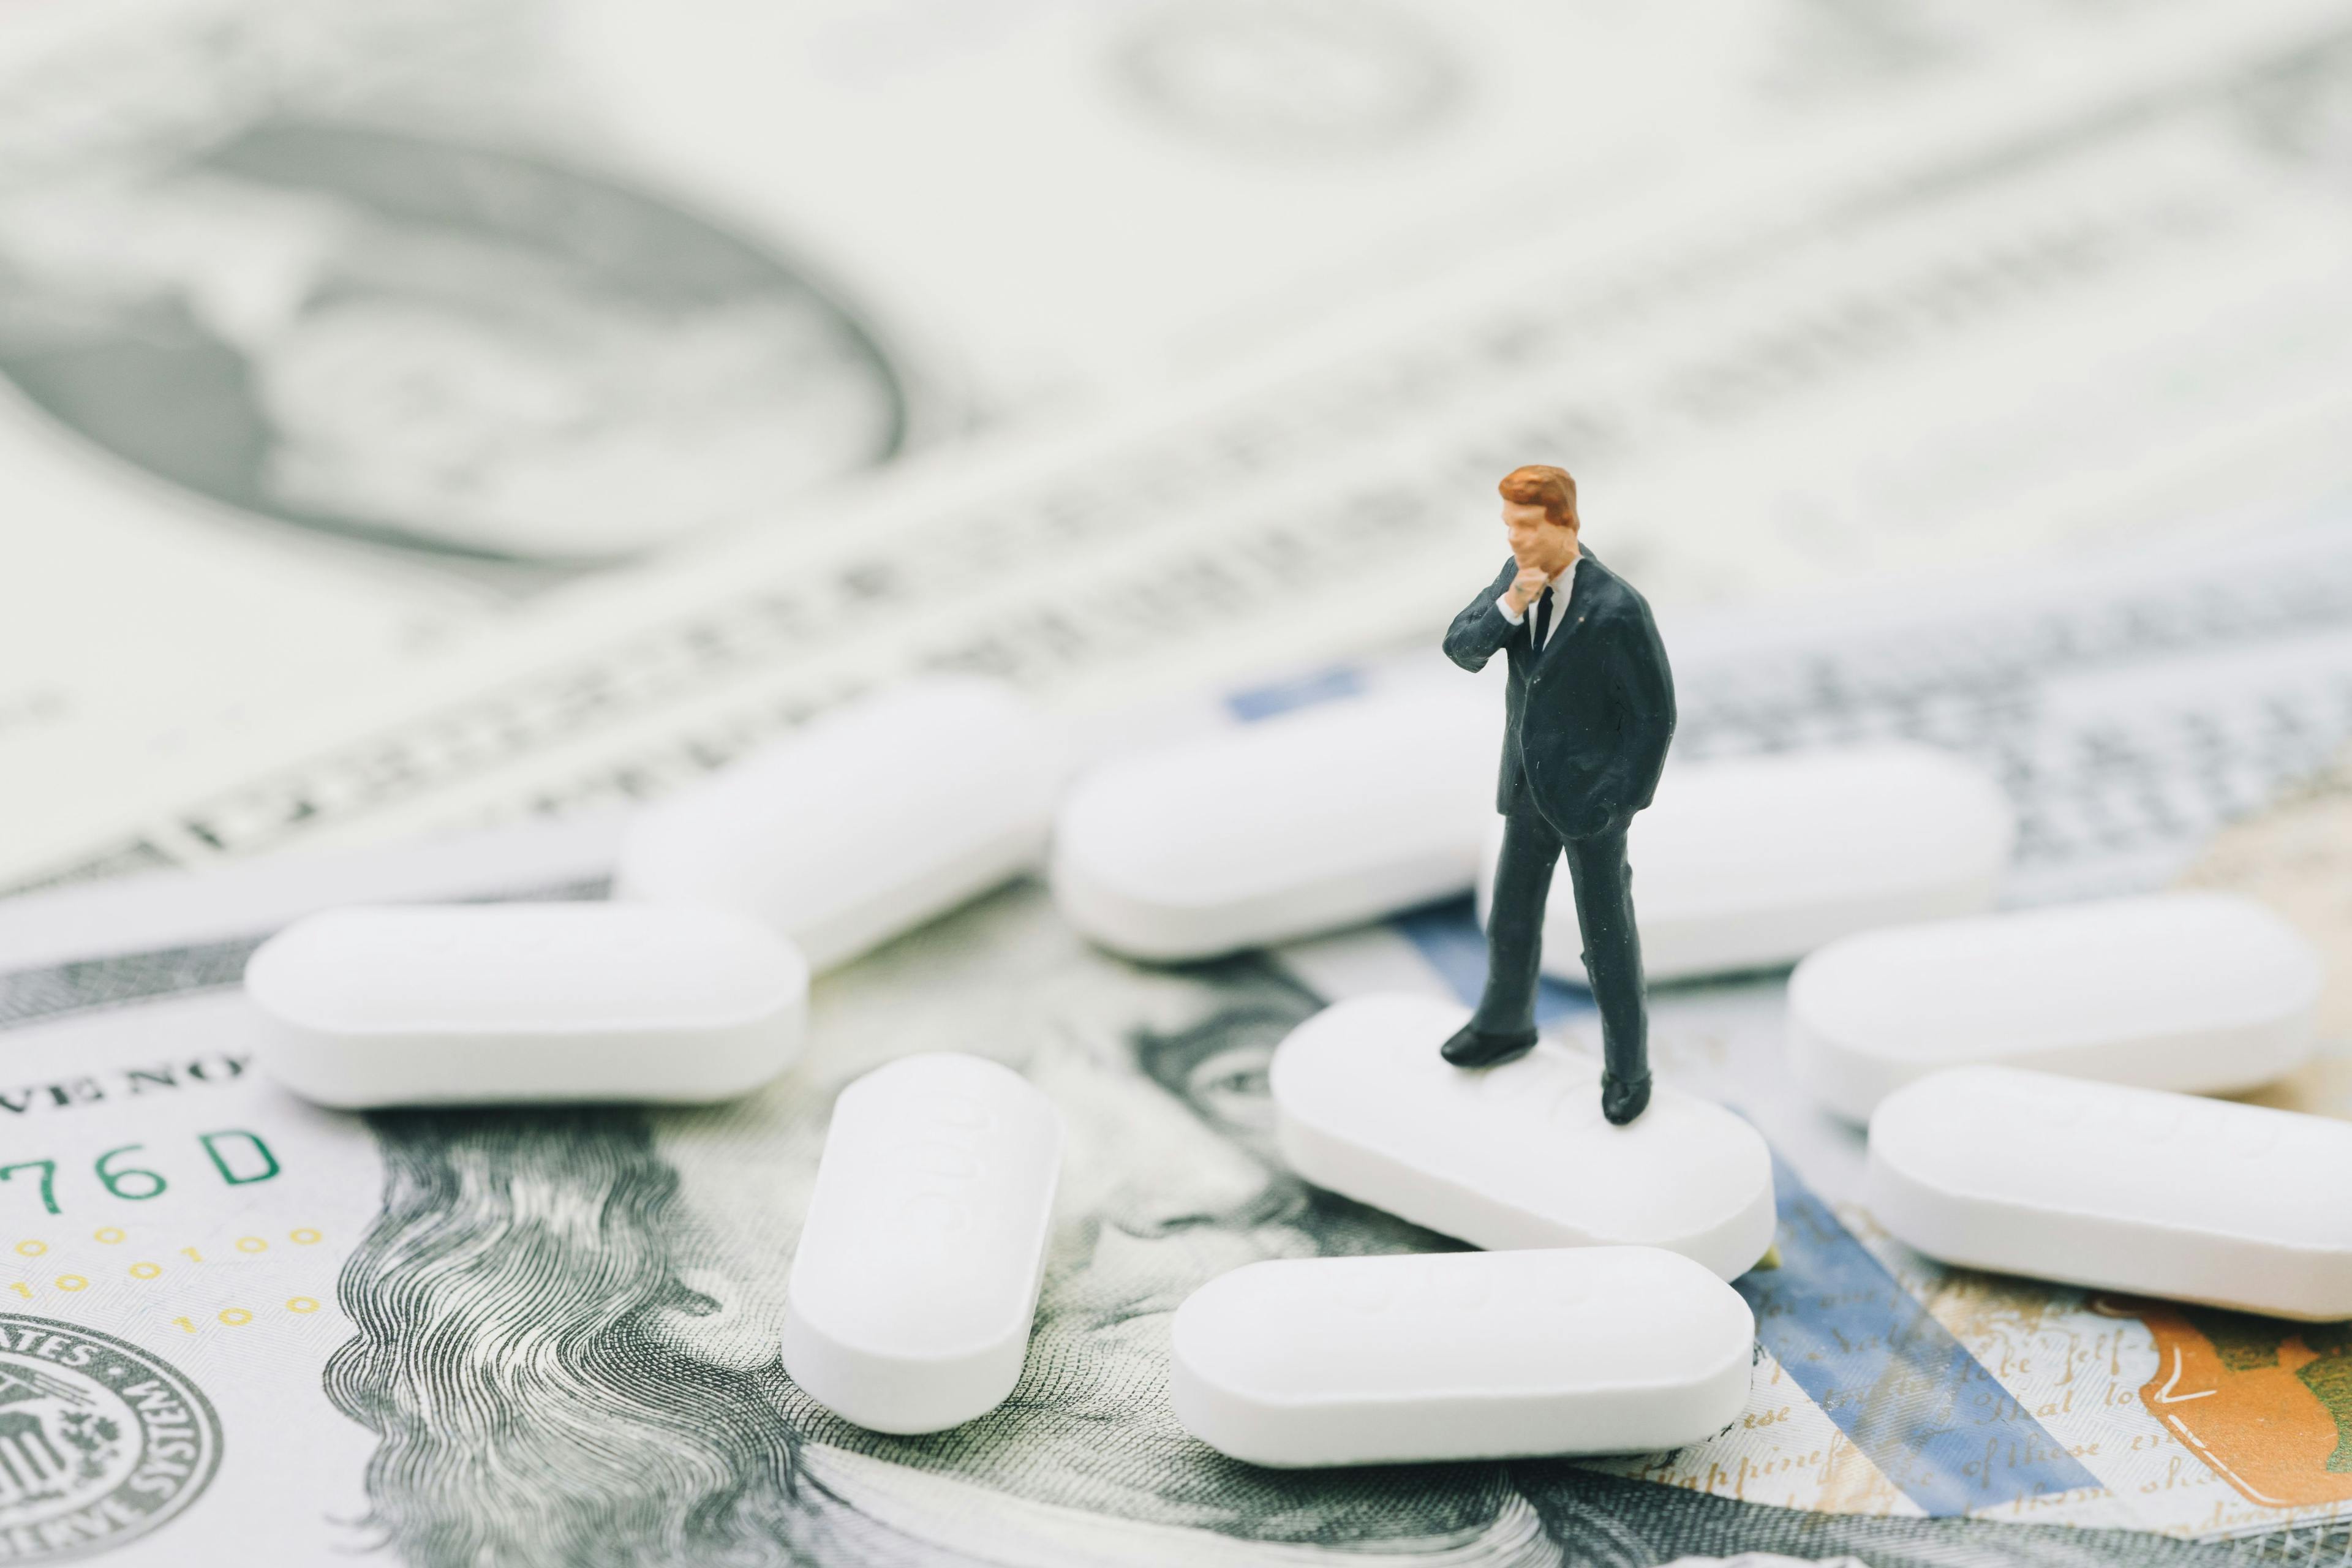 Medicare Drug Price Negotiations to Move Forward